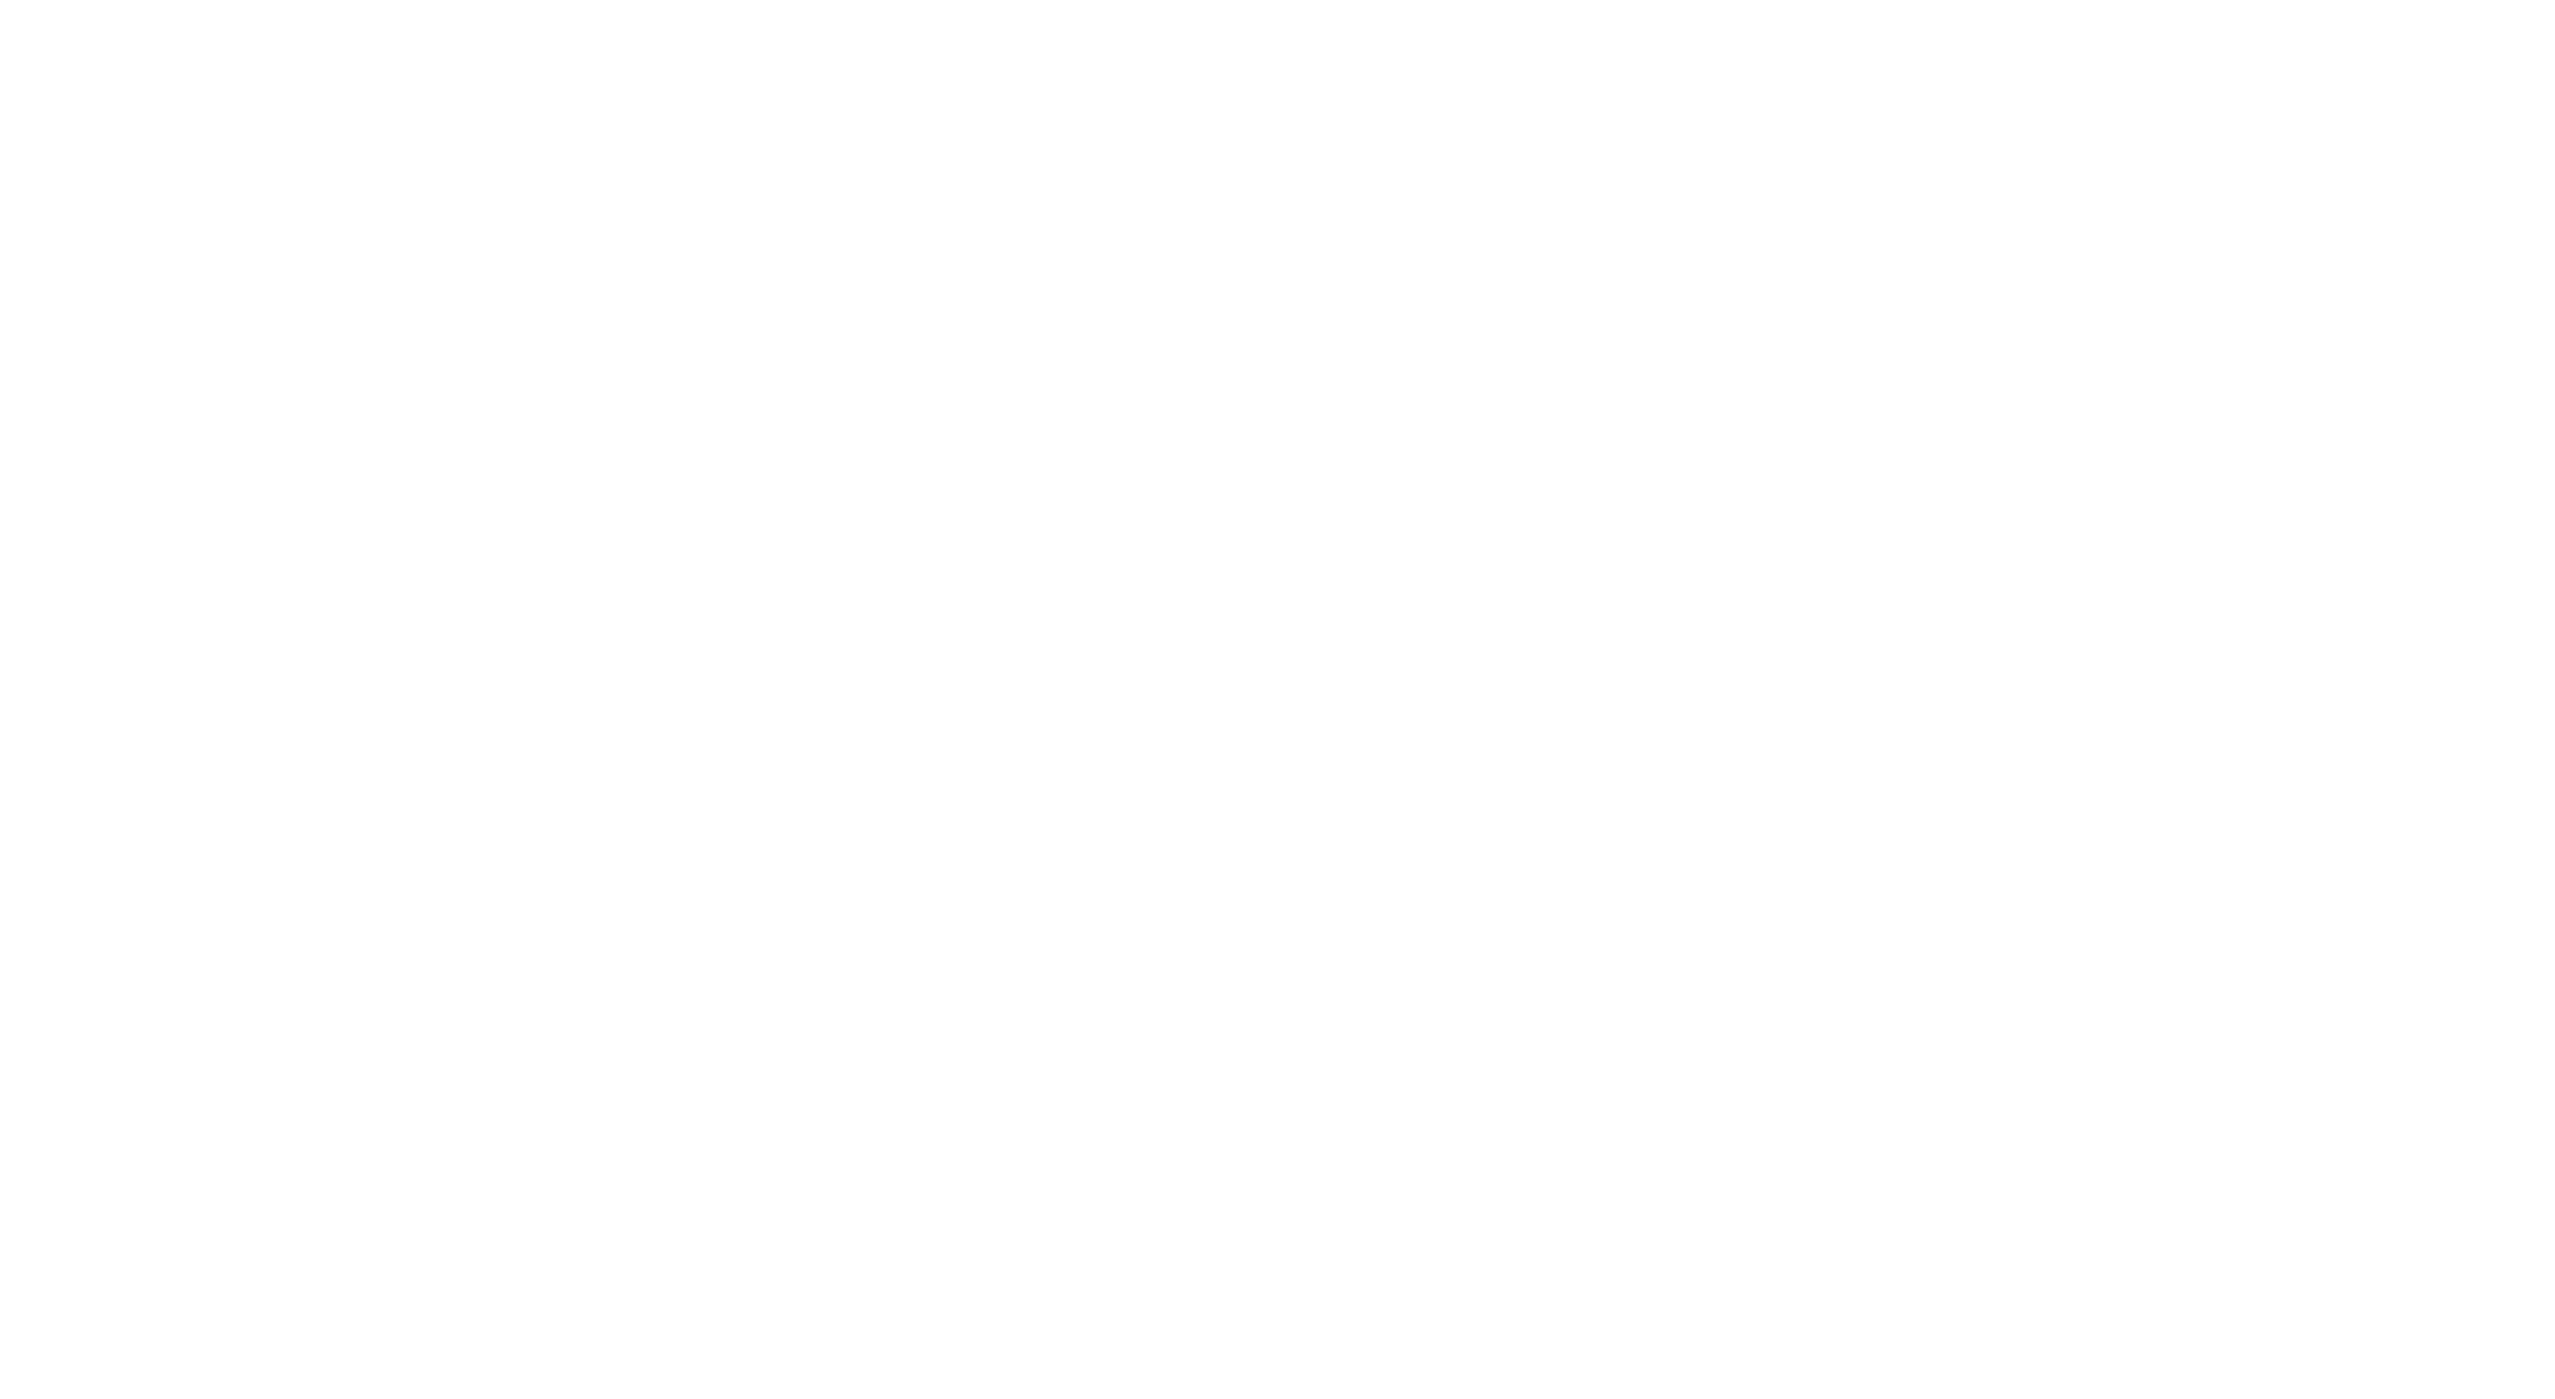 World NTD Day